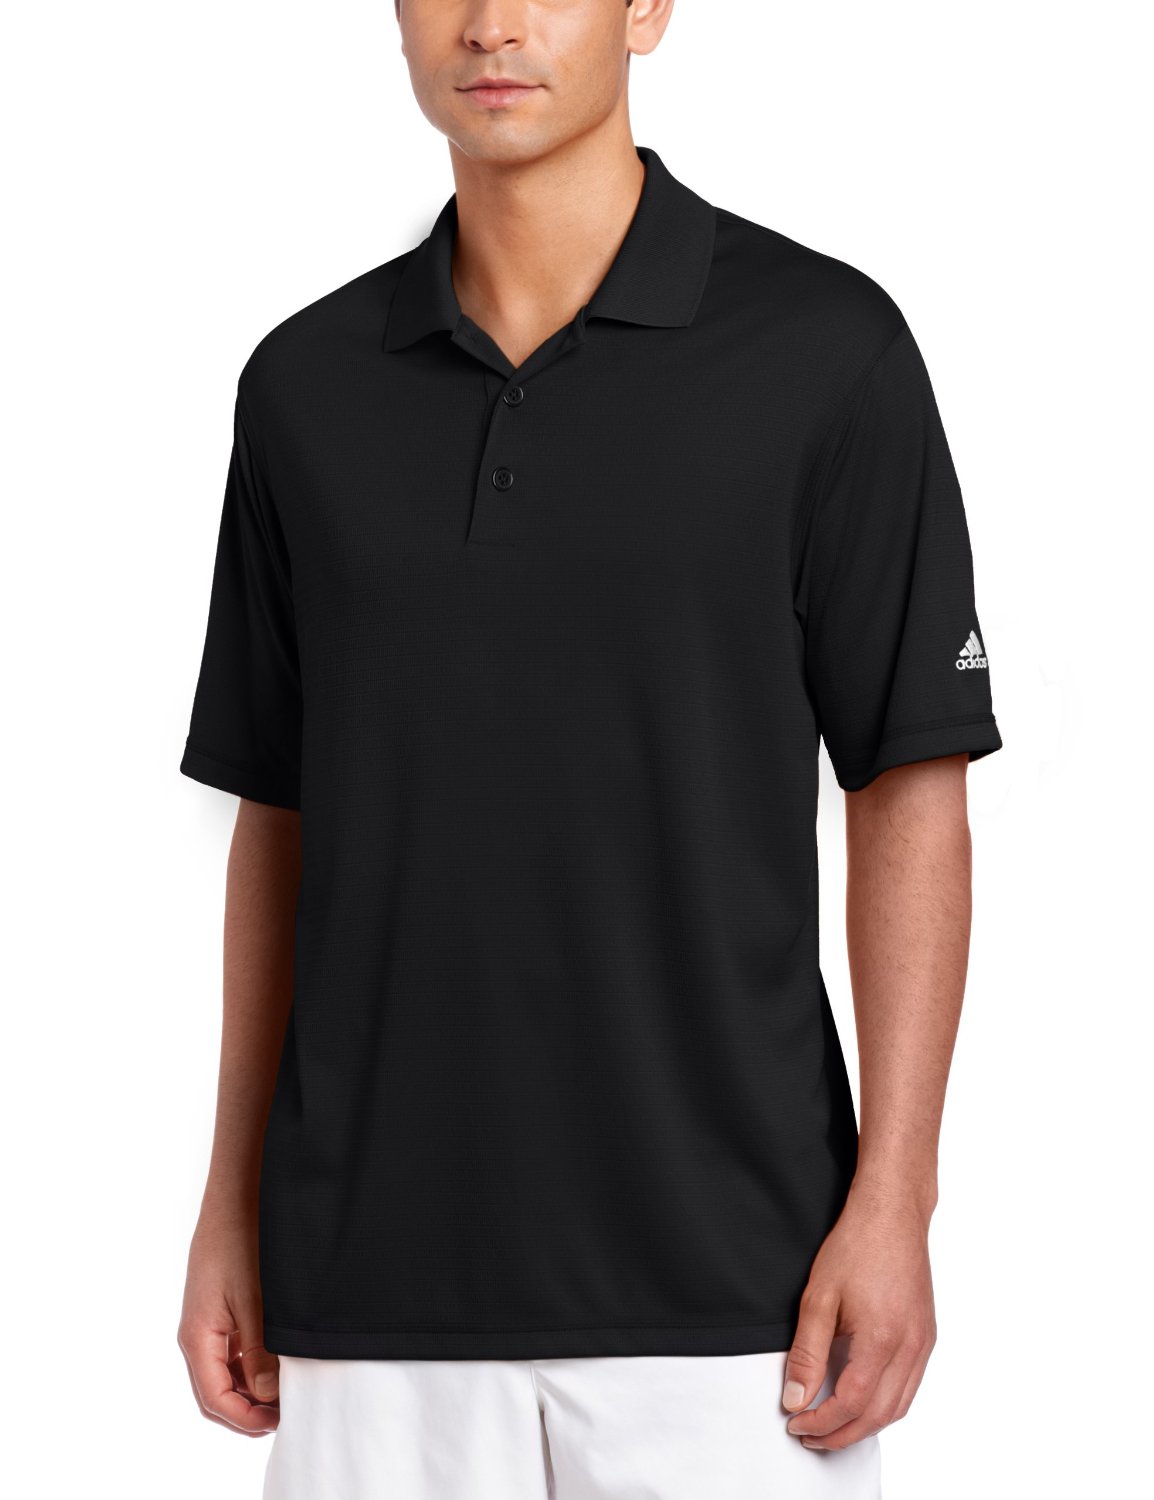 Adidas Mens Climalite Solid Golf Polo Shirts